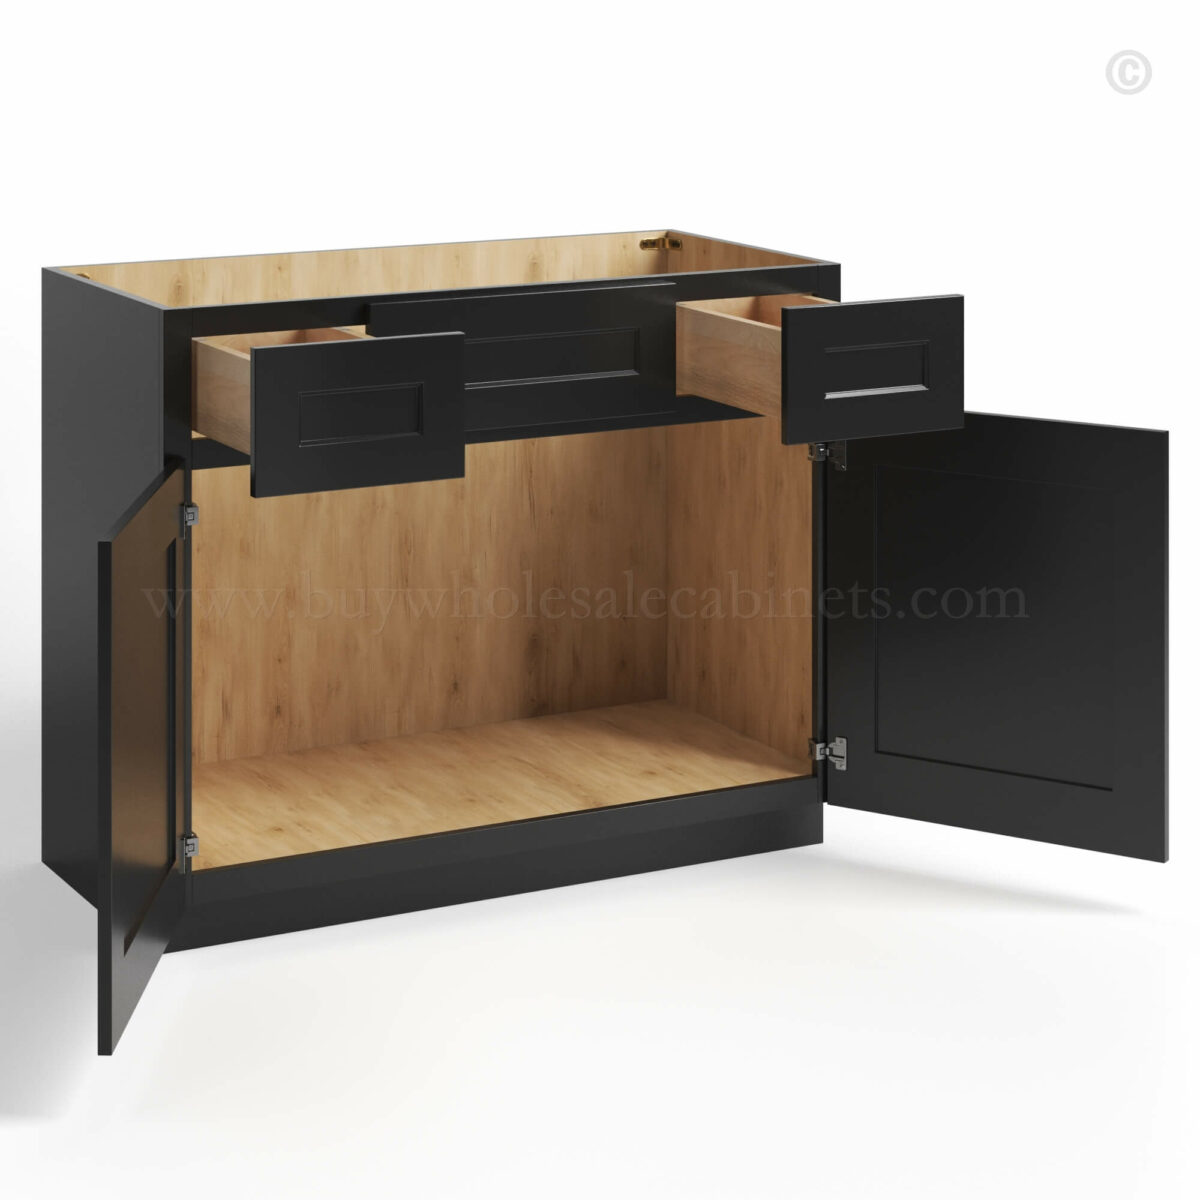 Black Shaker Vanity Sink Base Combo 42″W, rta cabinets, wholesale cabinets